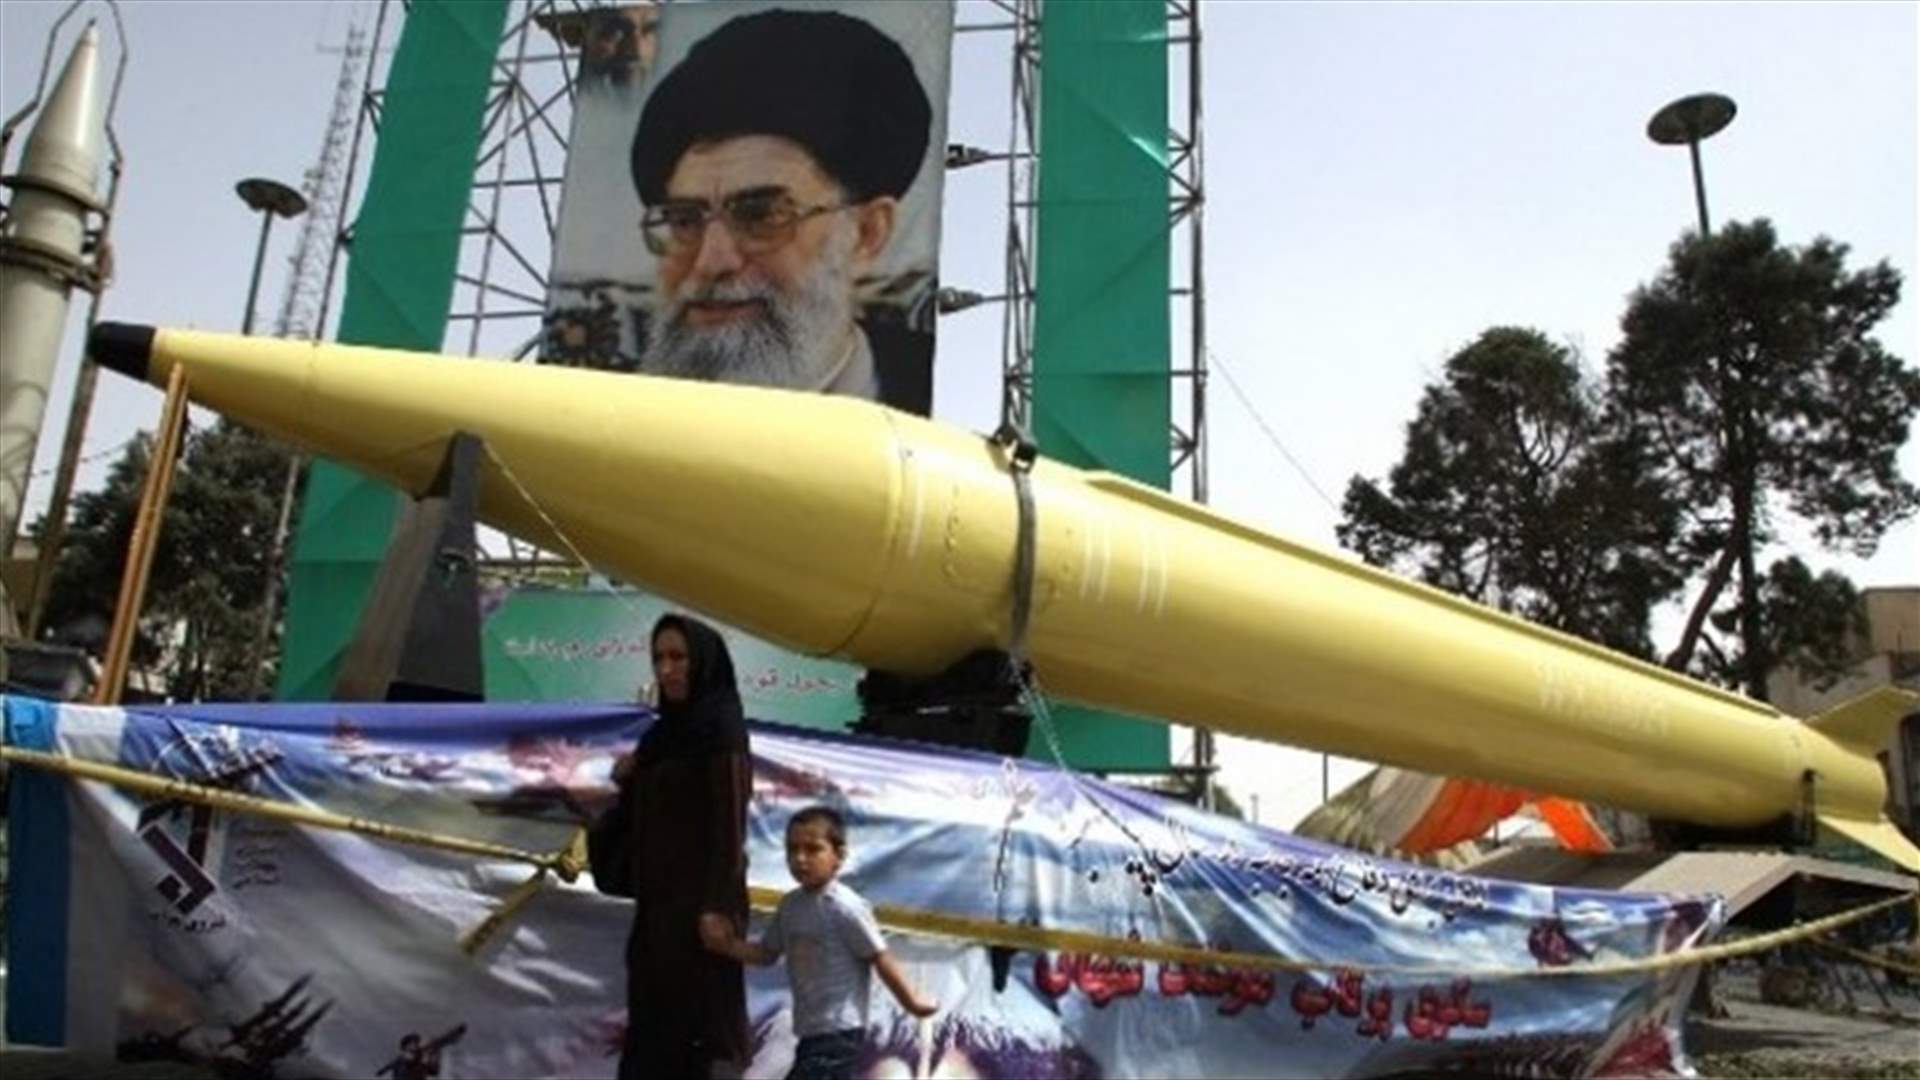 Iran has built third underground ballistic missile factory - Fars news agency